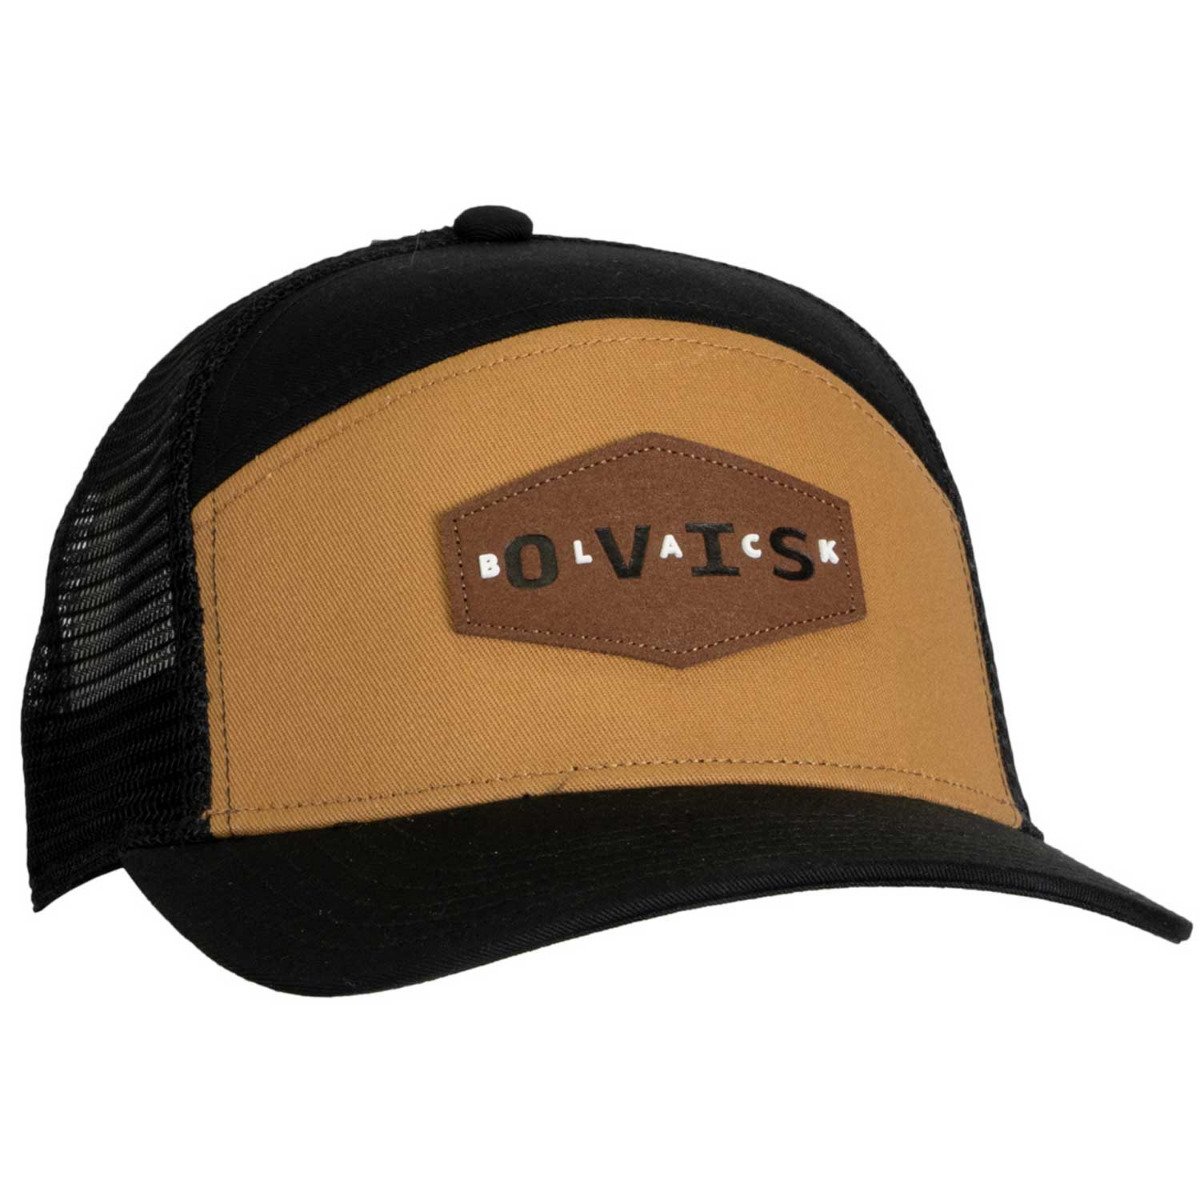 BlackOvis Fillmore Leather Patch Hat